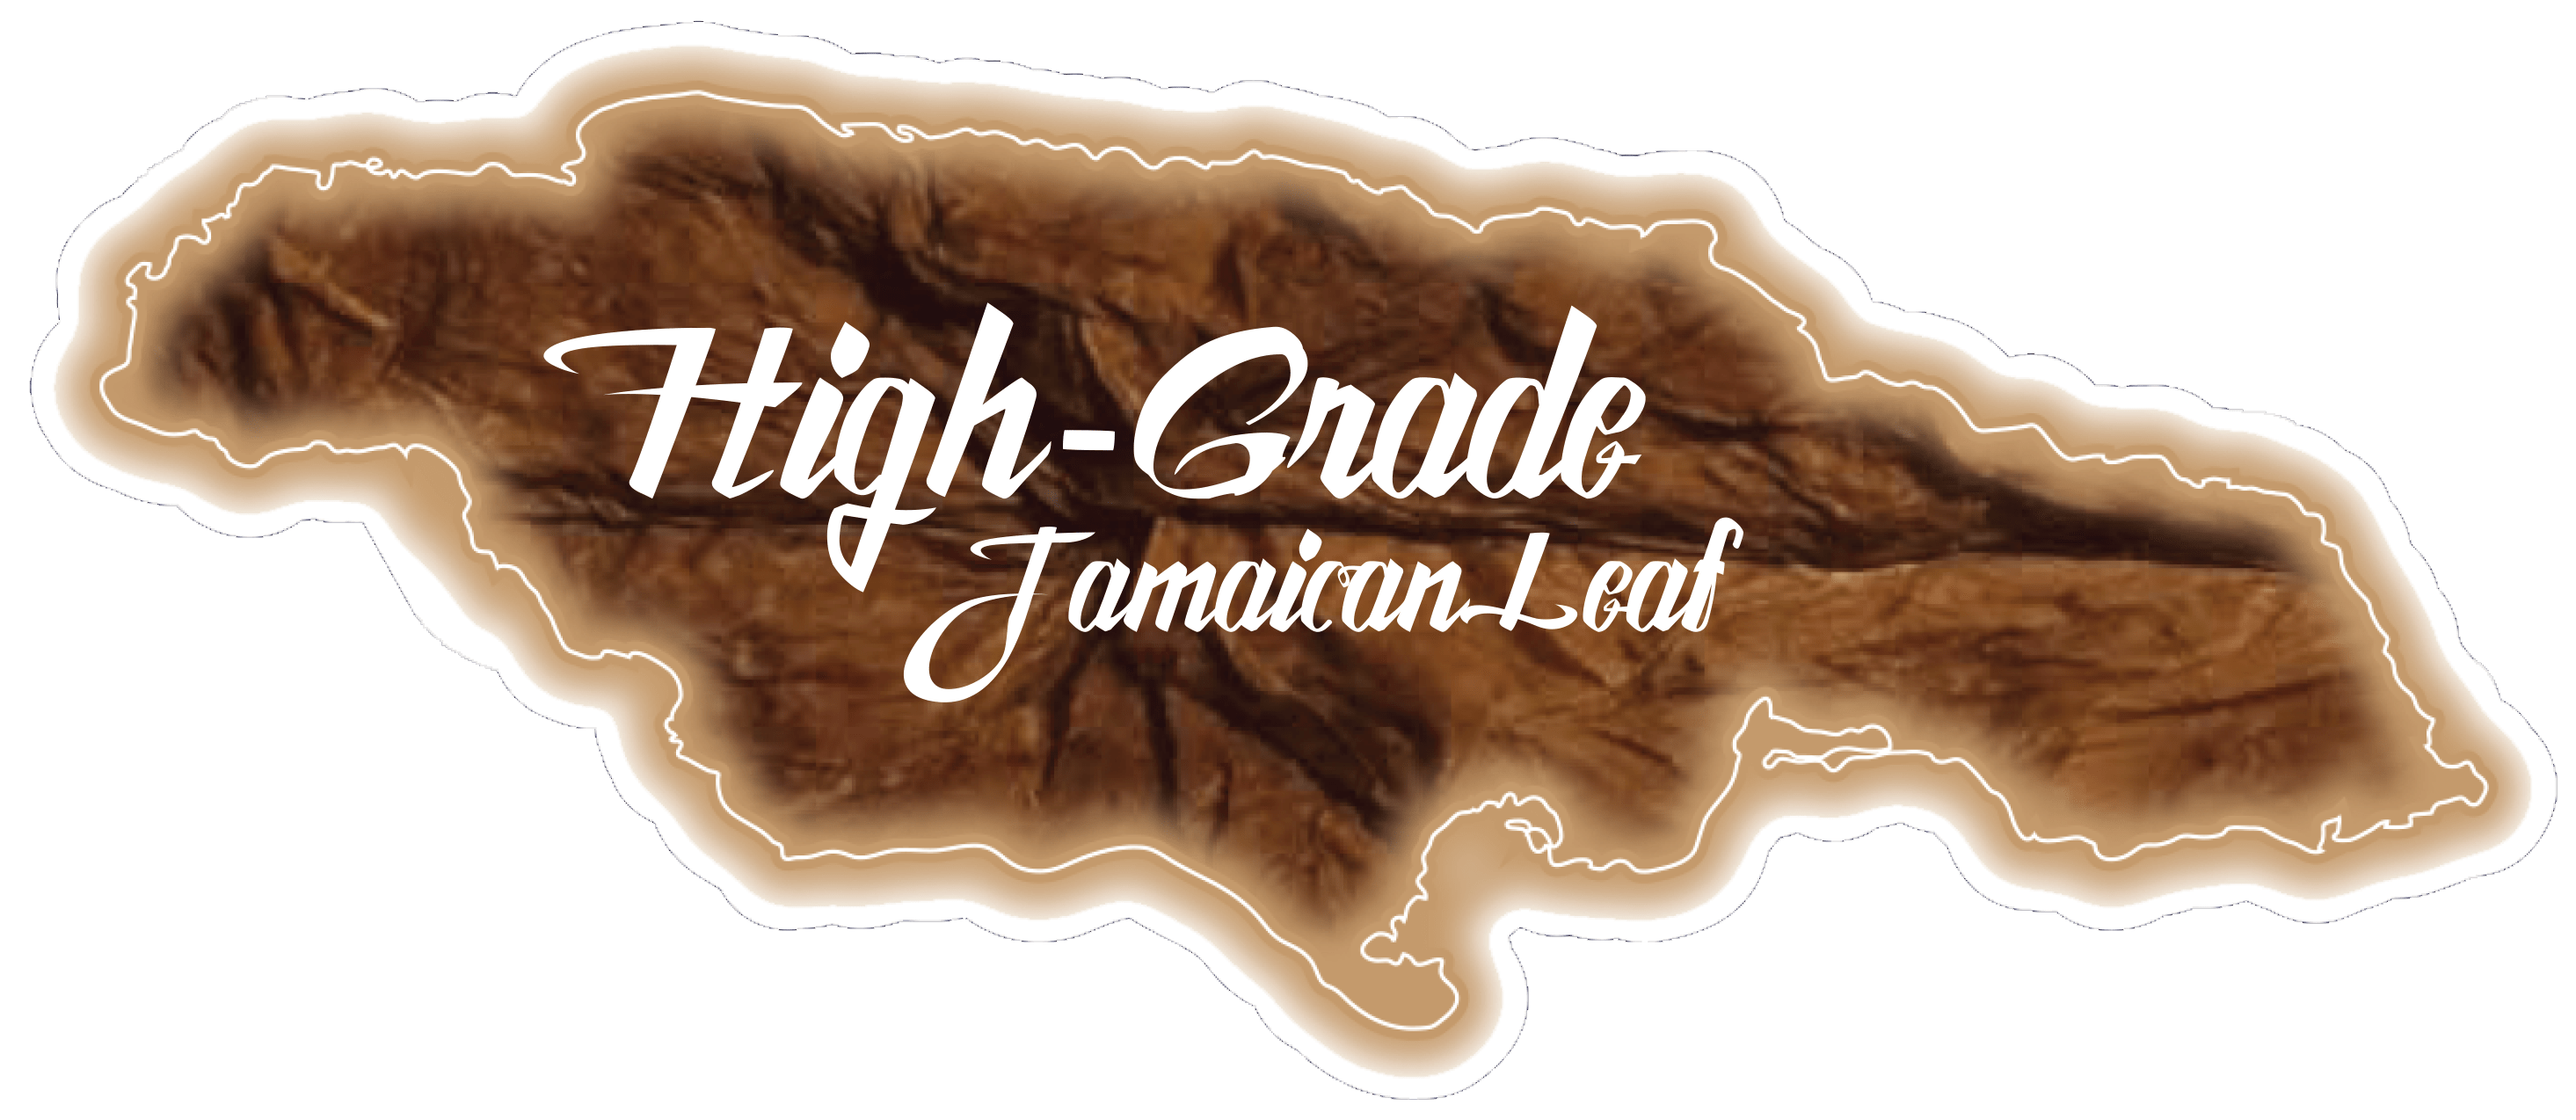 High-Grade Jamaican Leaf Logo